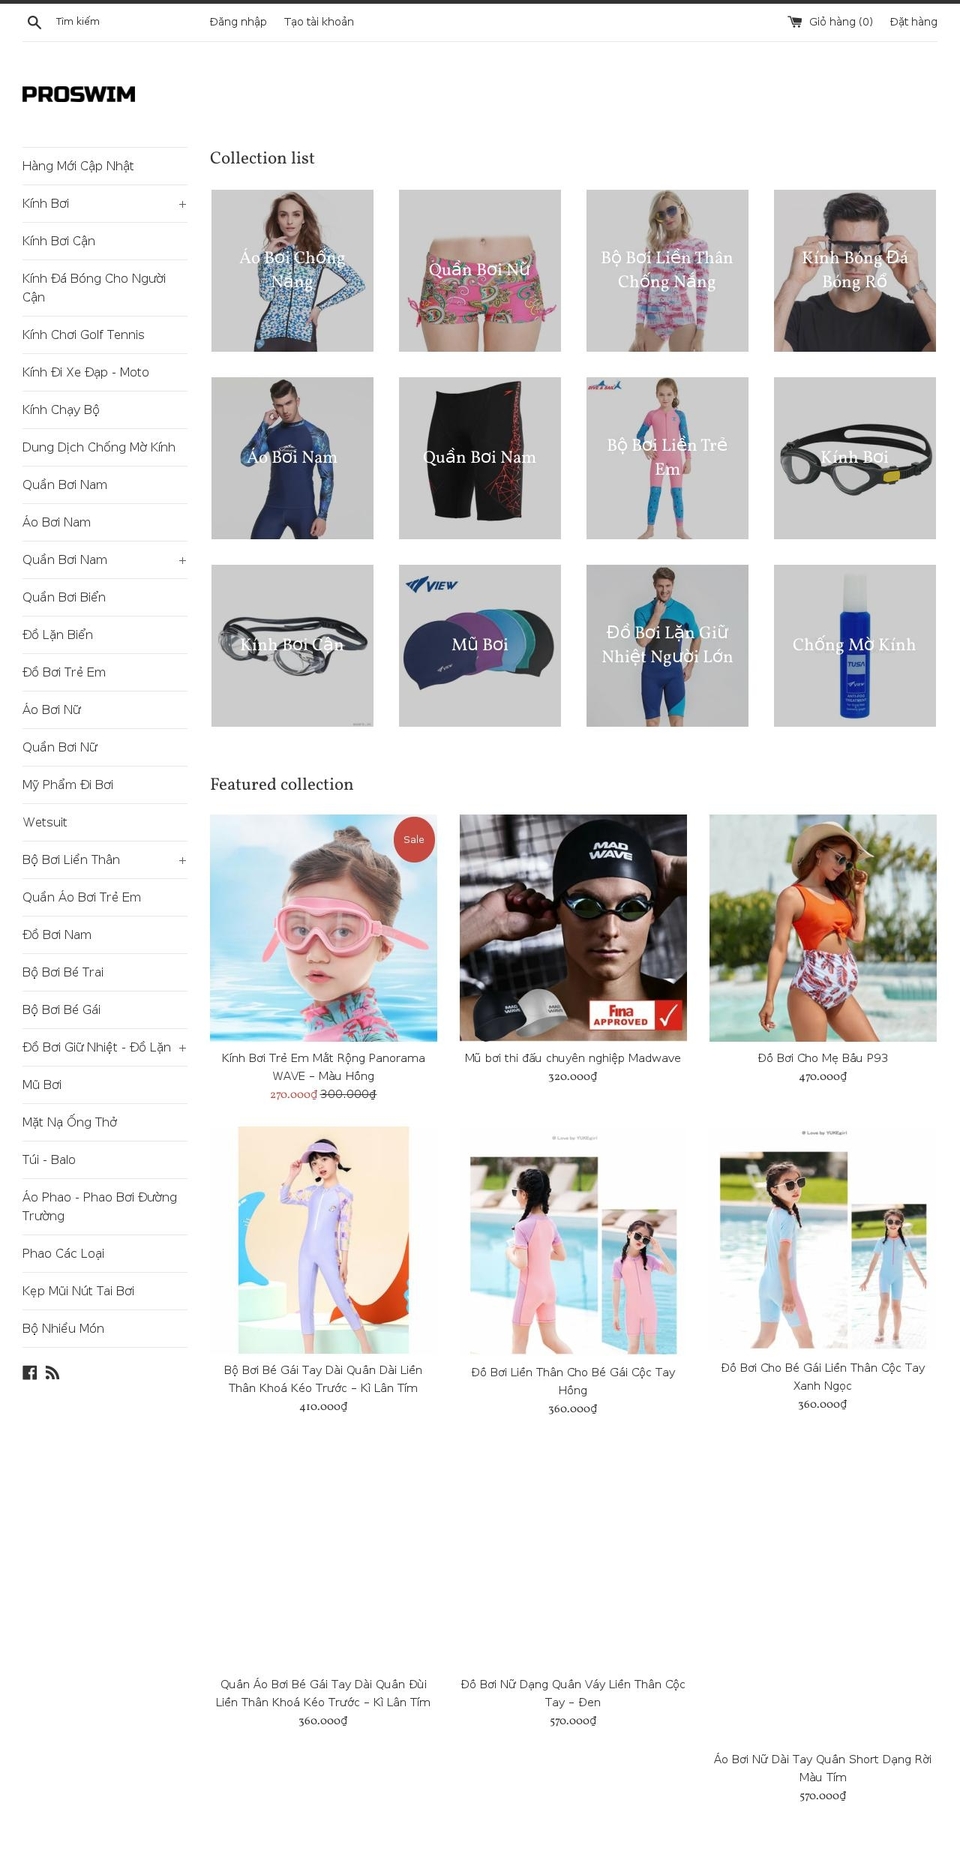 proswim.vn shopify website screenshot